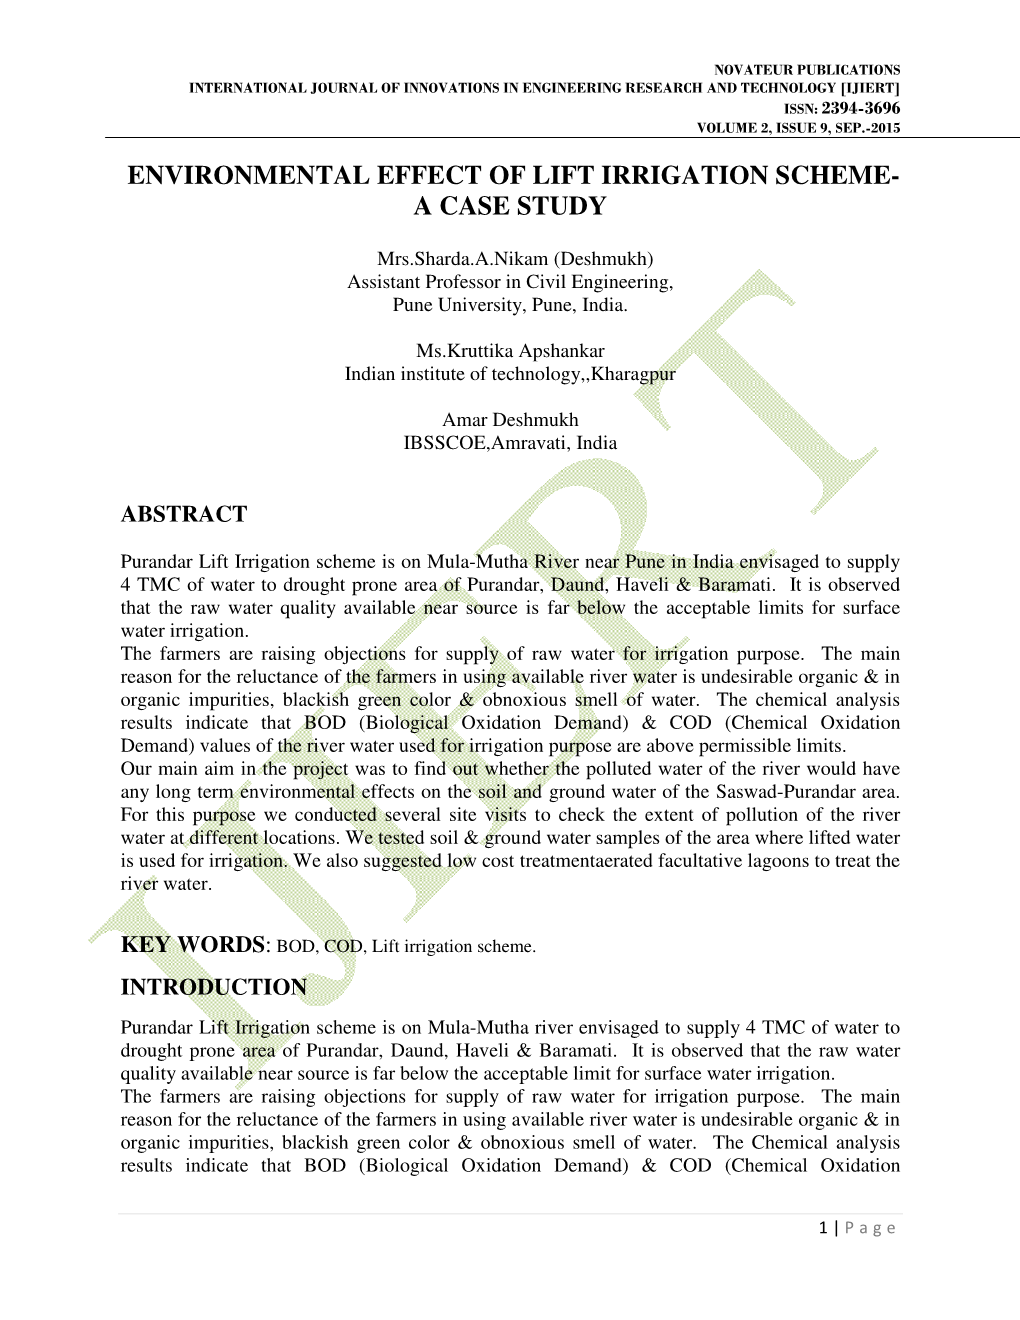 Environmental Effect of Lift Irrigation Scheme- a Case Study